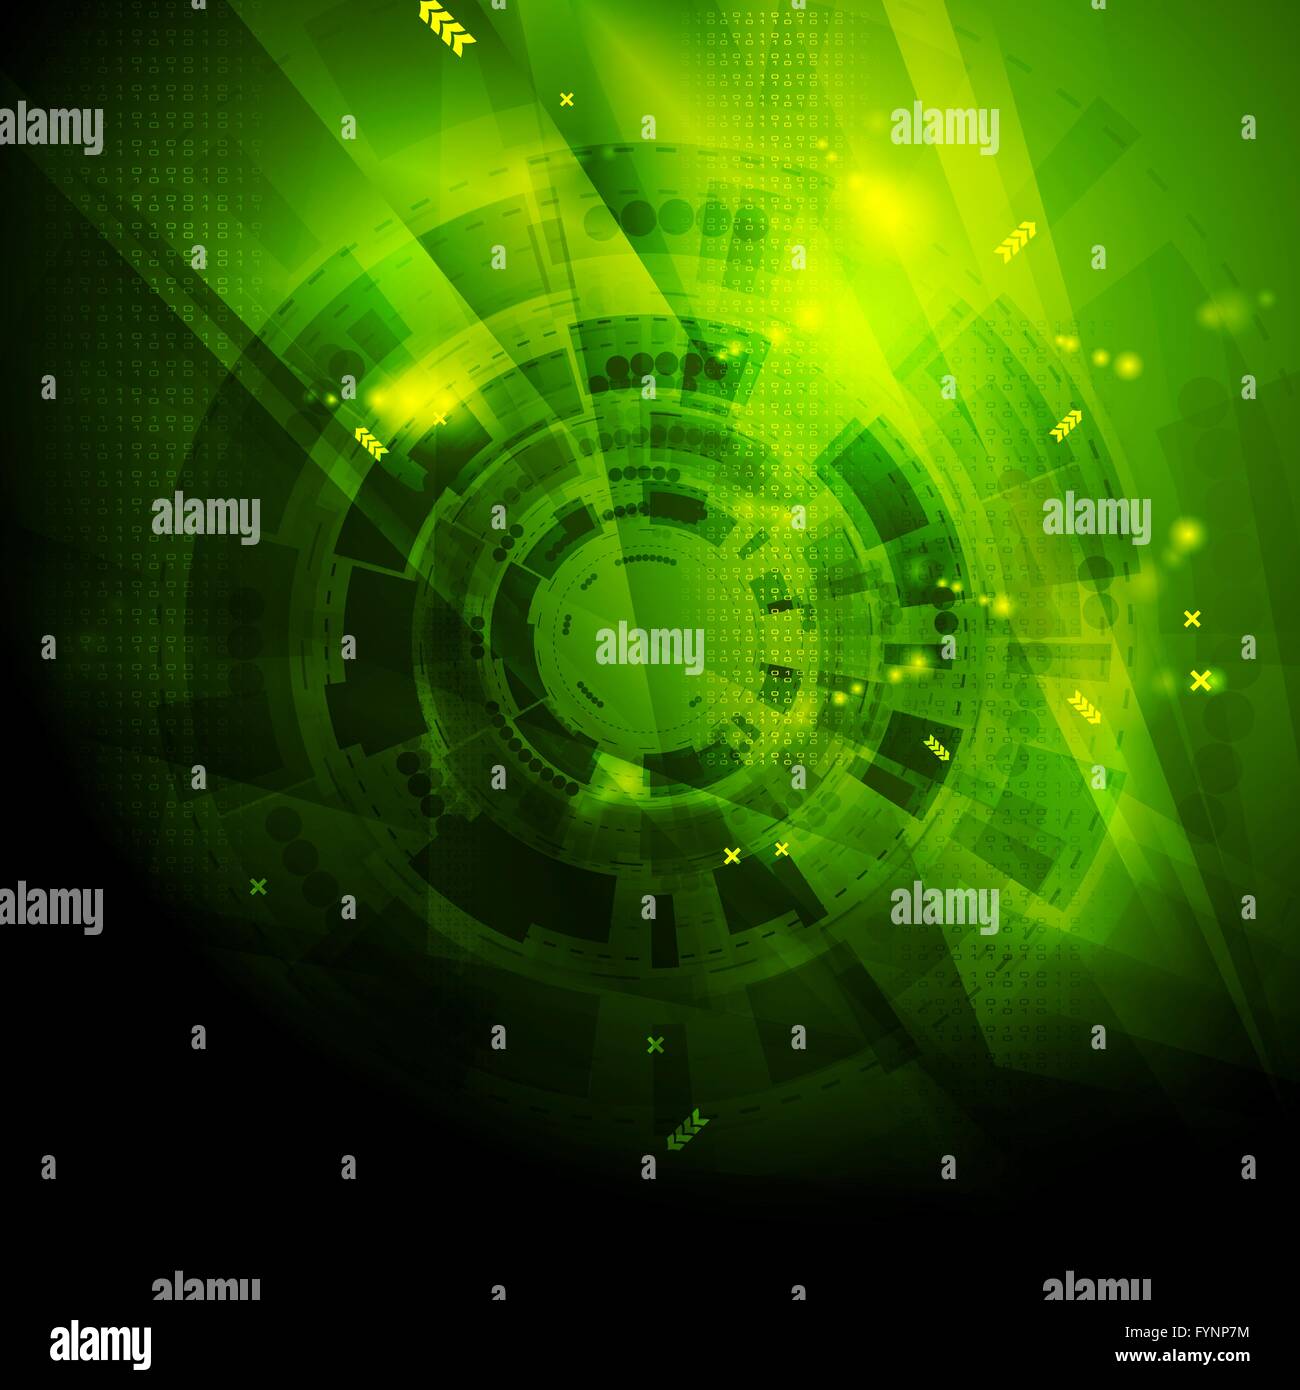 Shiny green engineering tech vector background Stock Photo